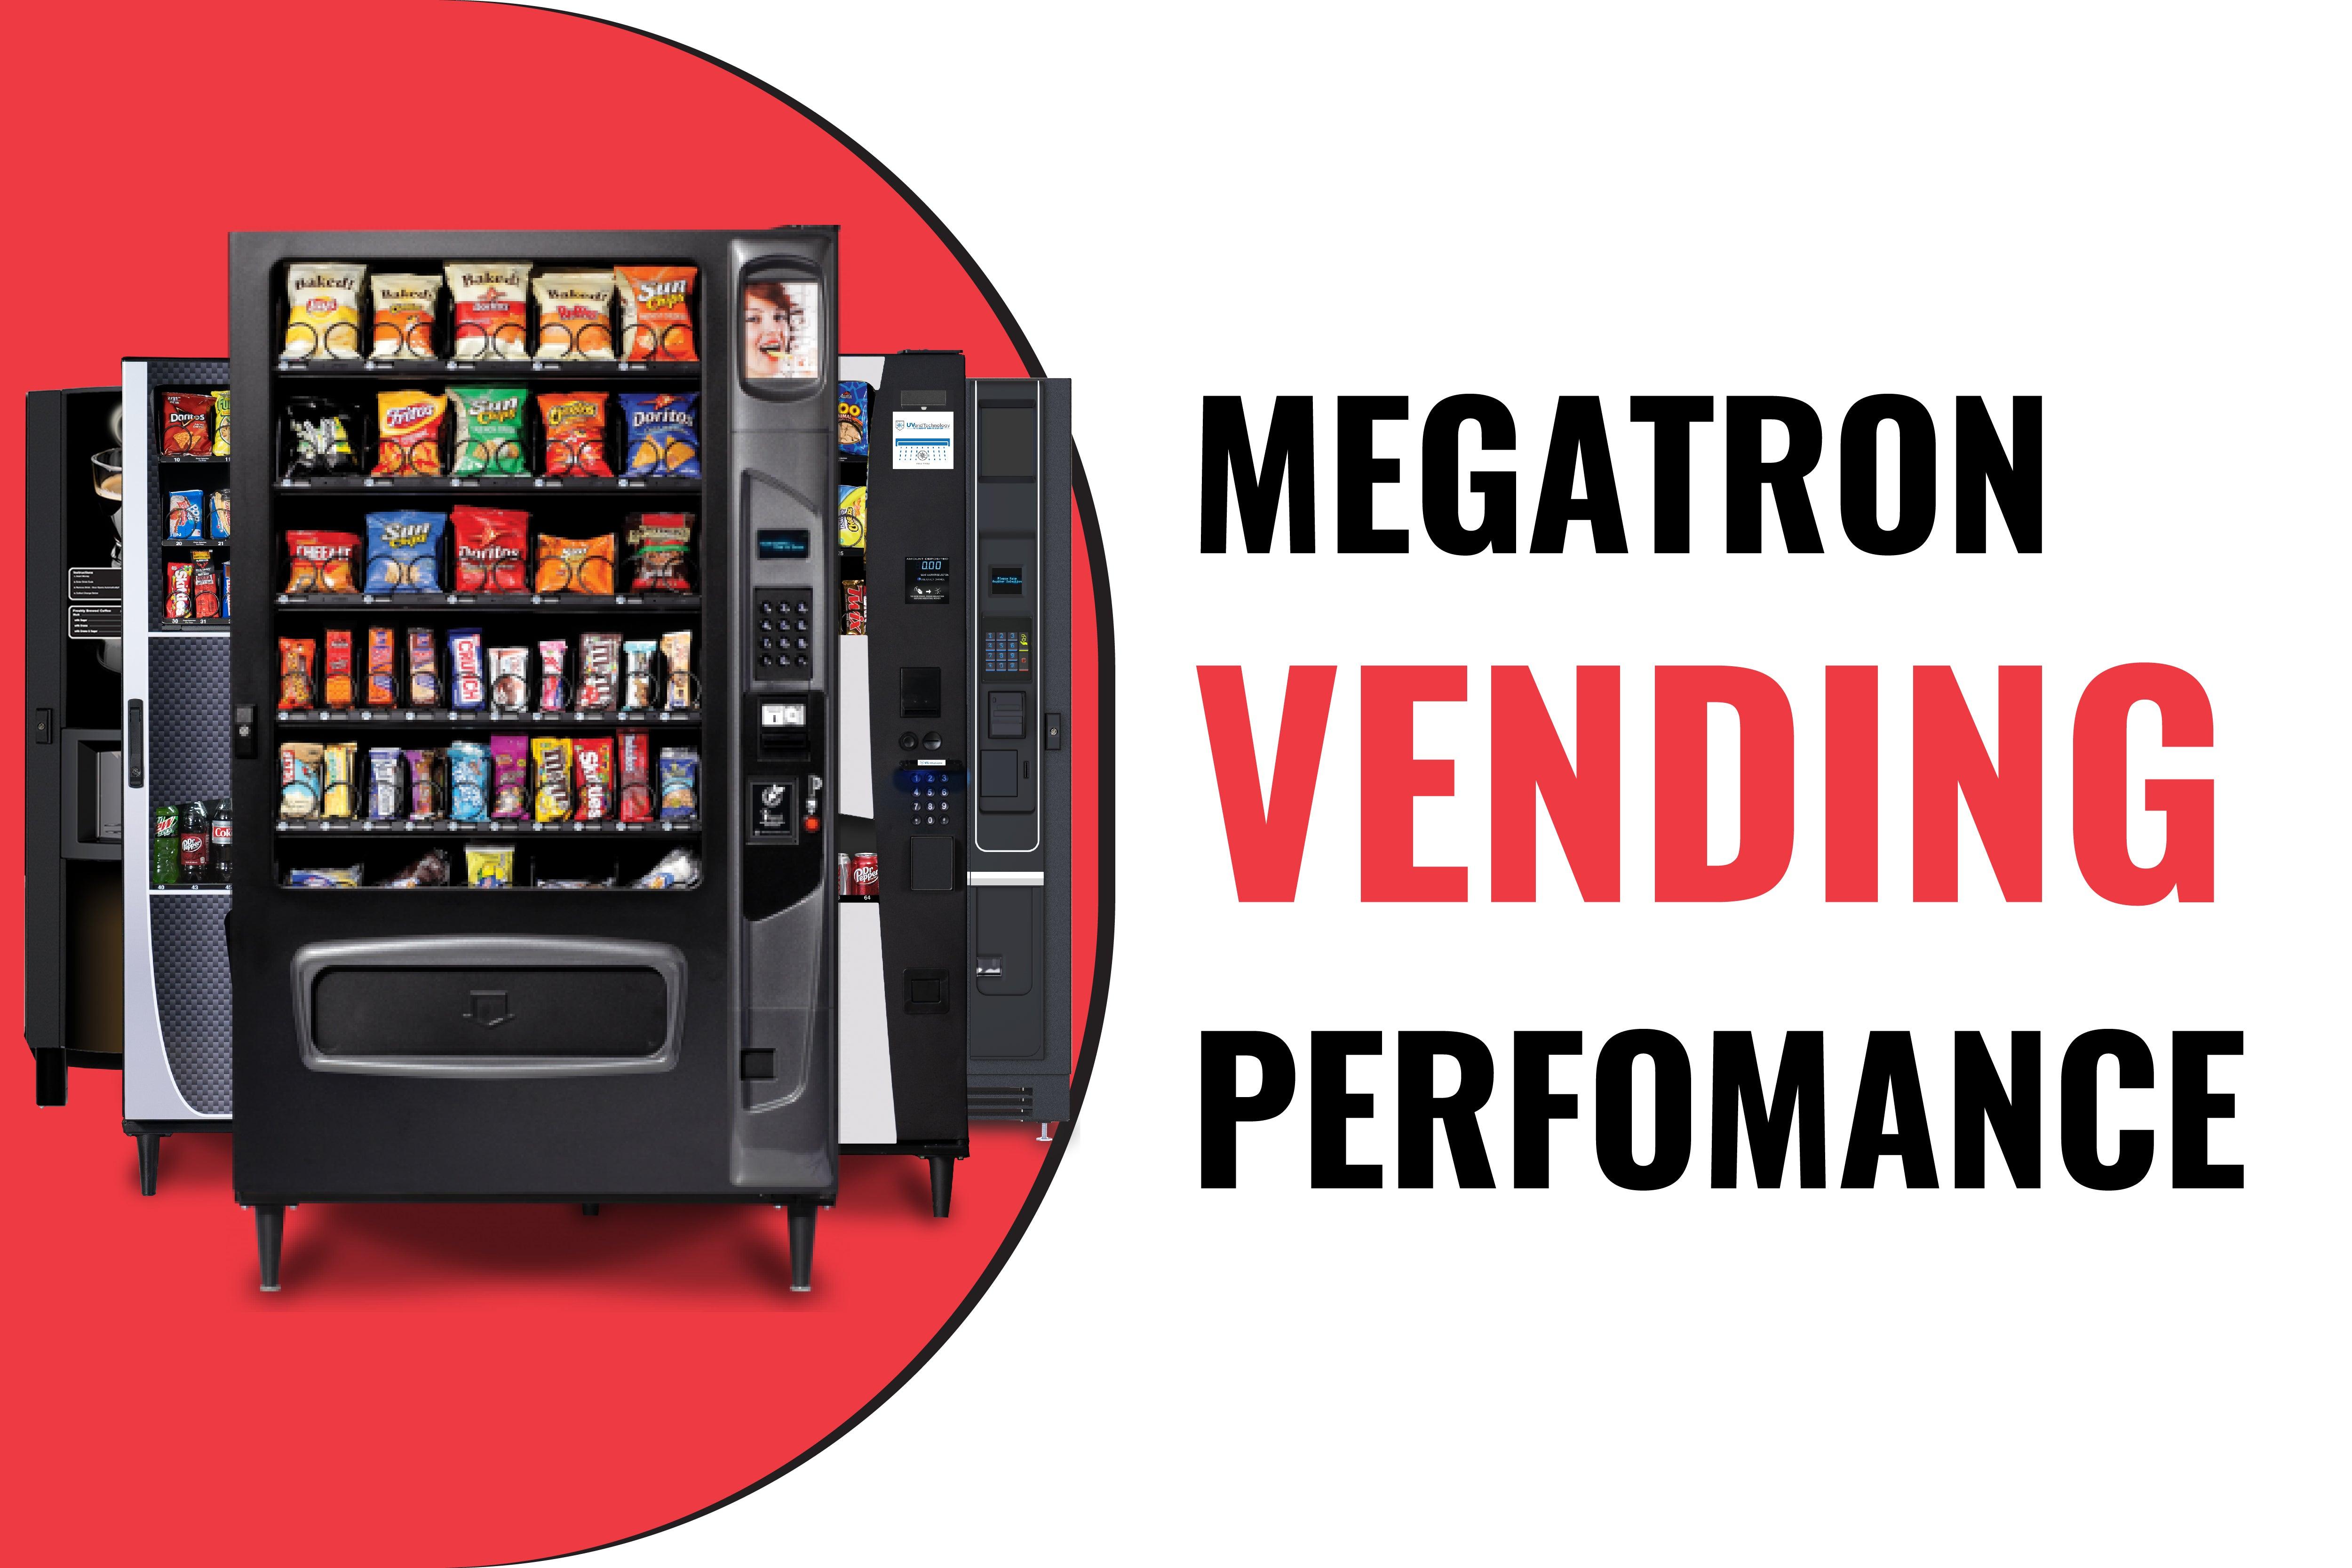 Vending News: Megatron Vending Performance - Vendnet